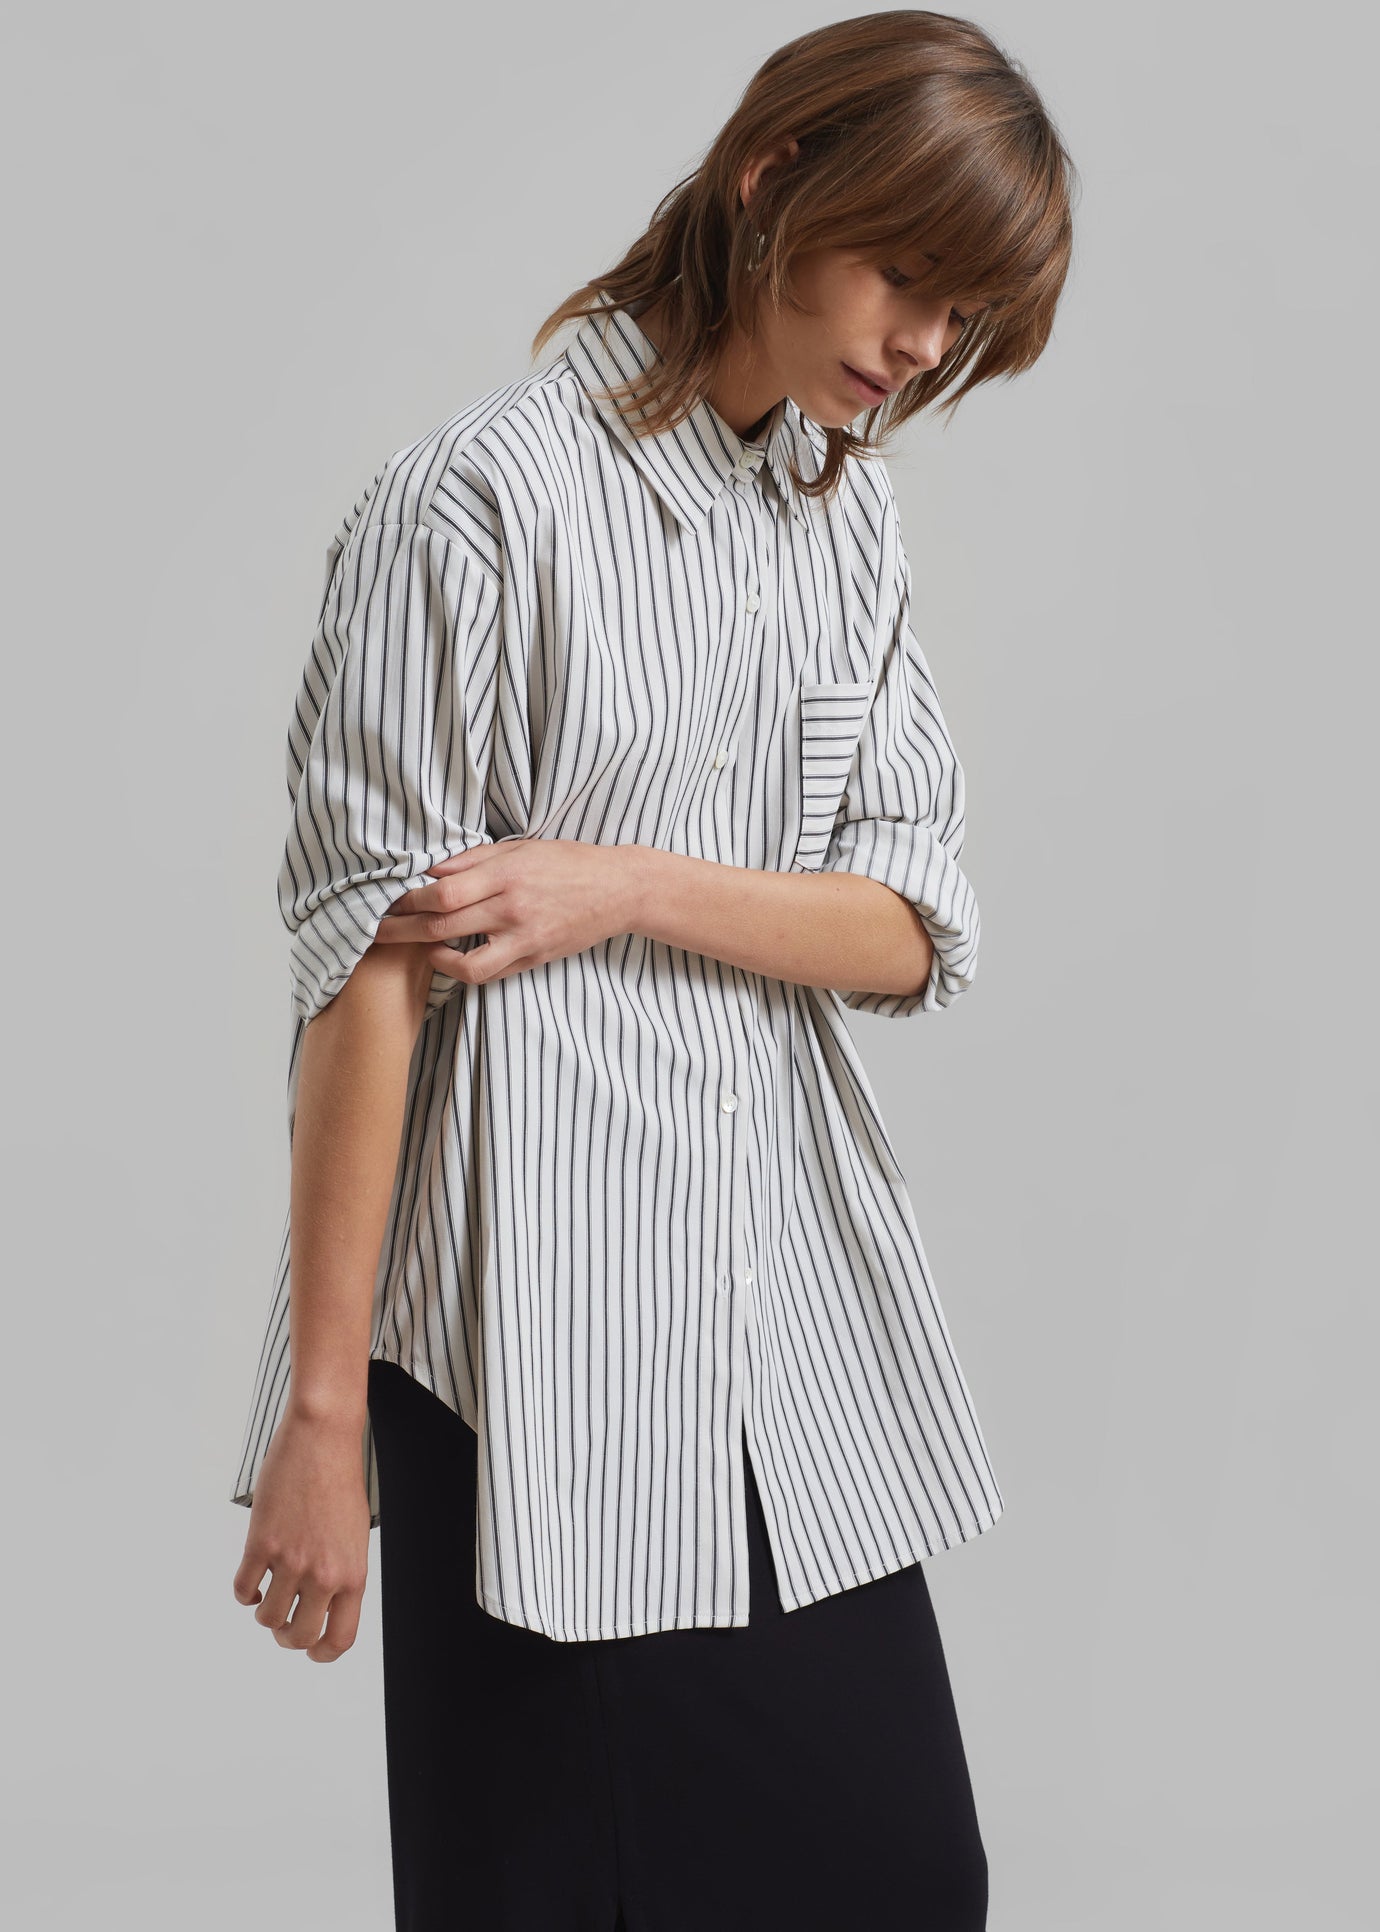 Rine Pocket Shirt - White/Black Stripe